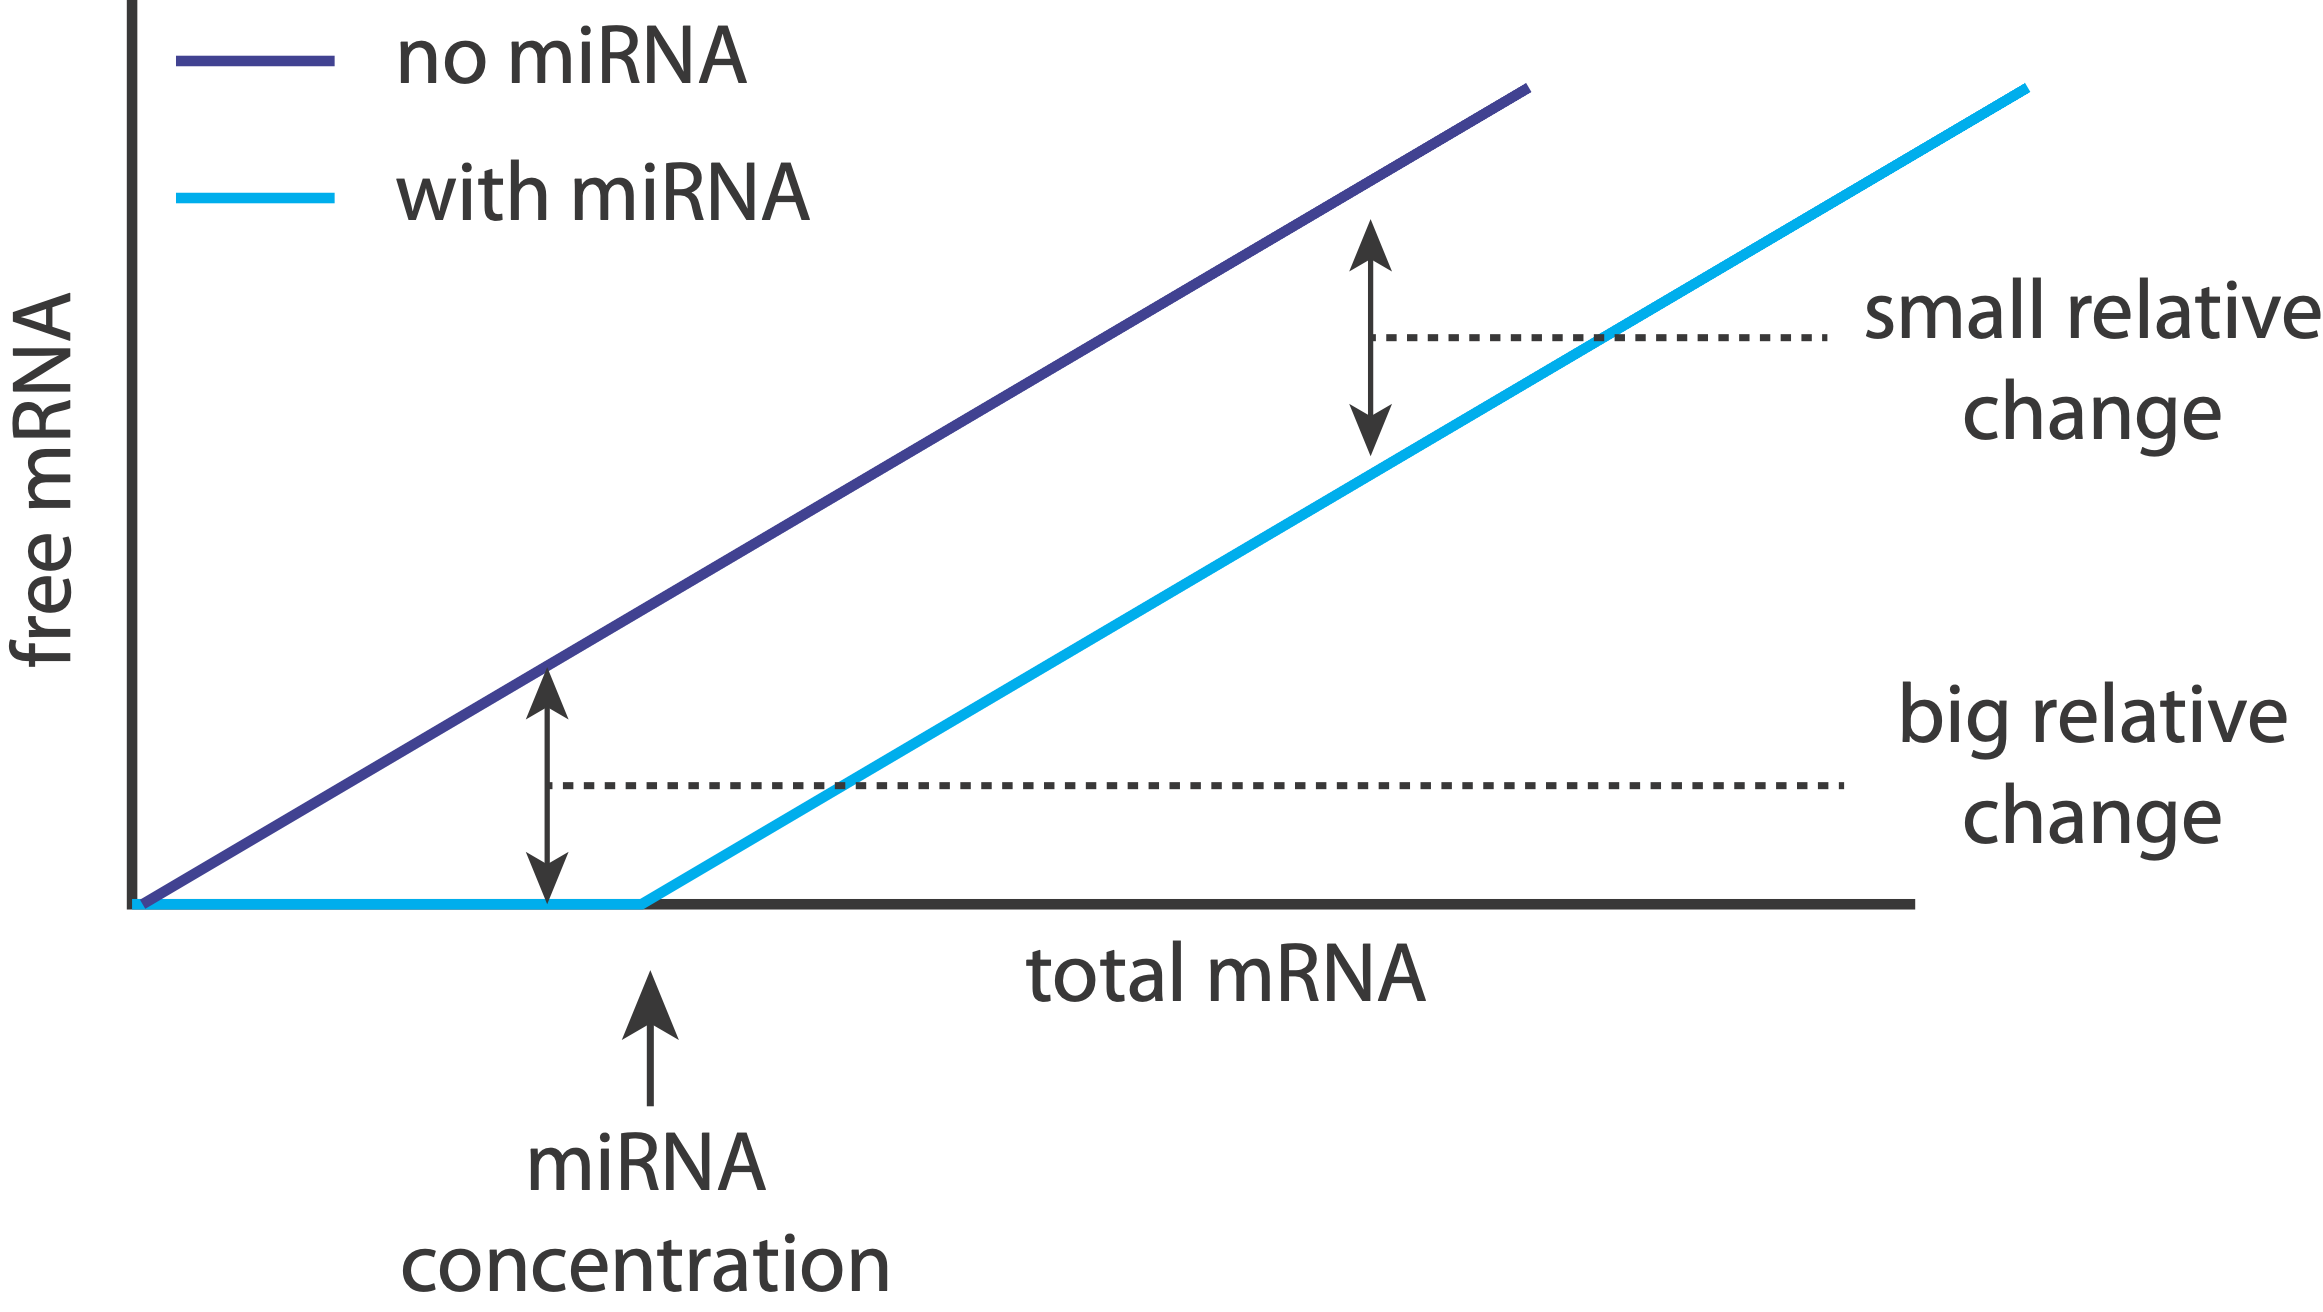 miRNA_relative_change.png